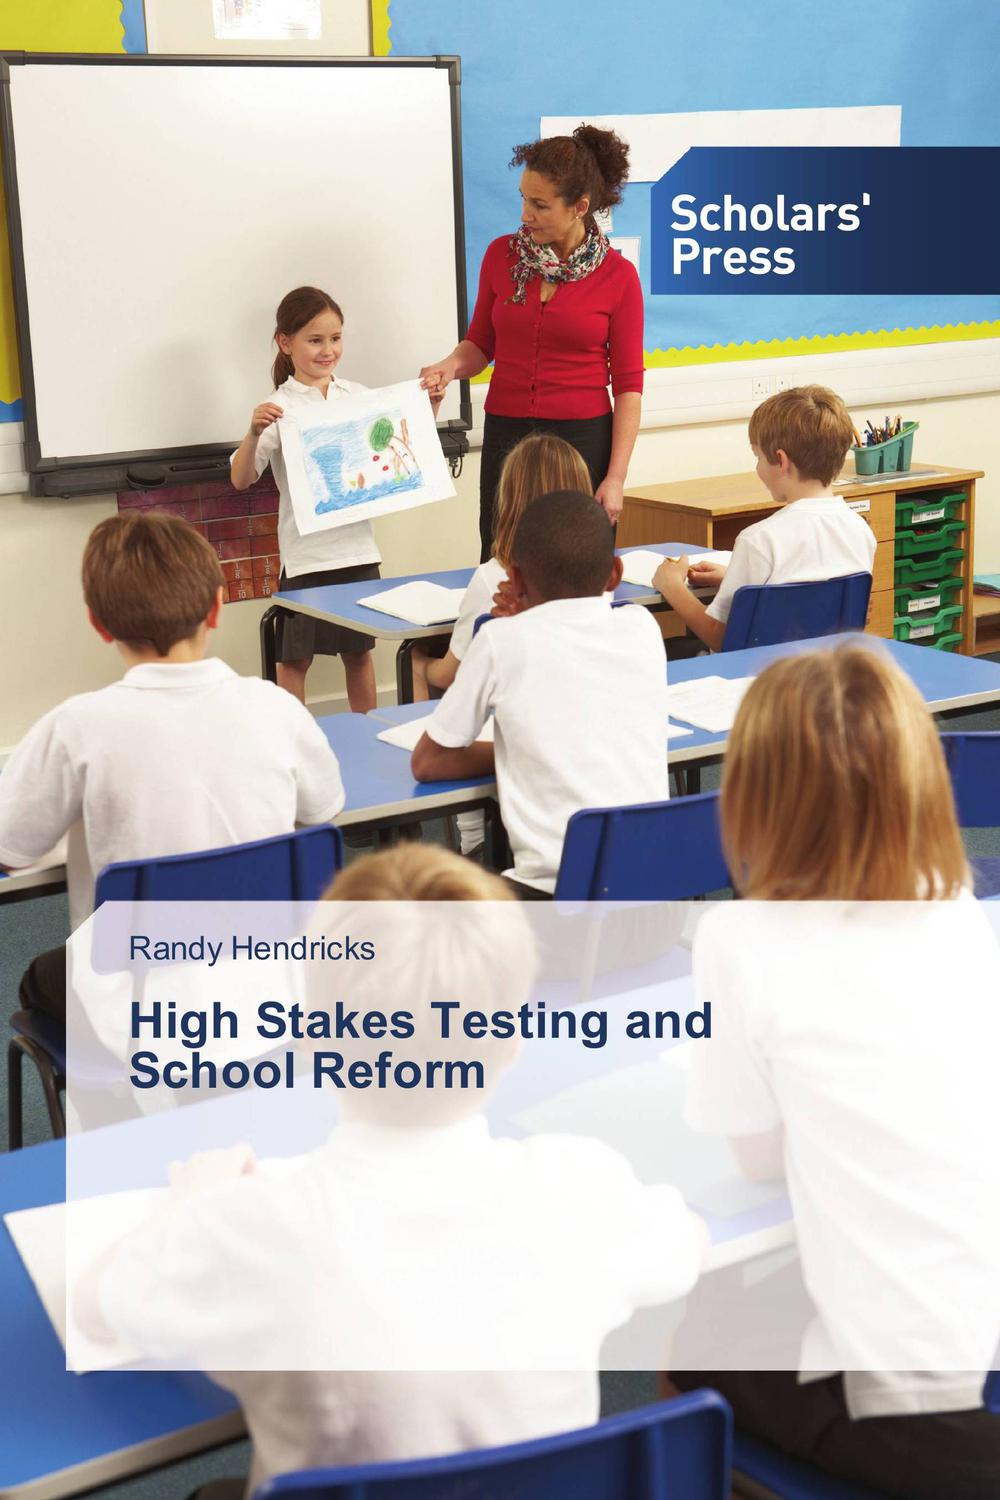 High Stakes Testing and School Reform - Randy Hendricks